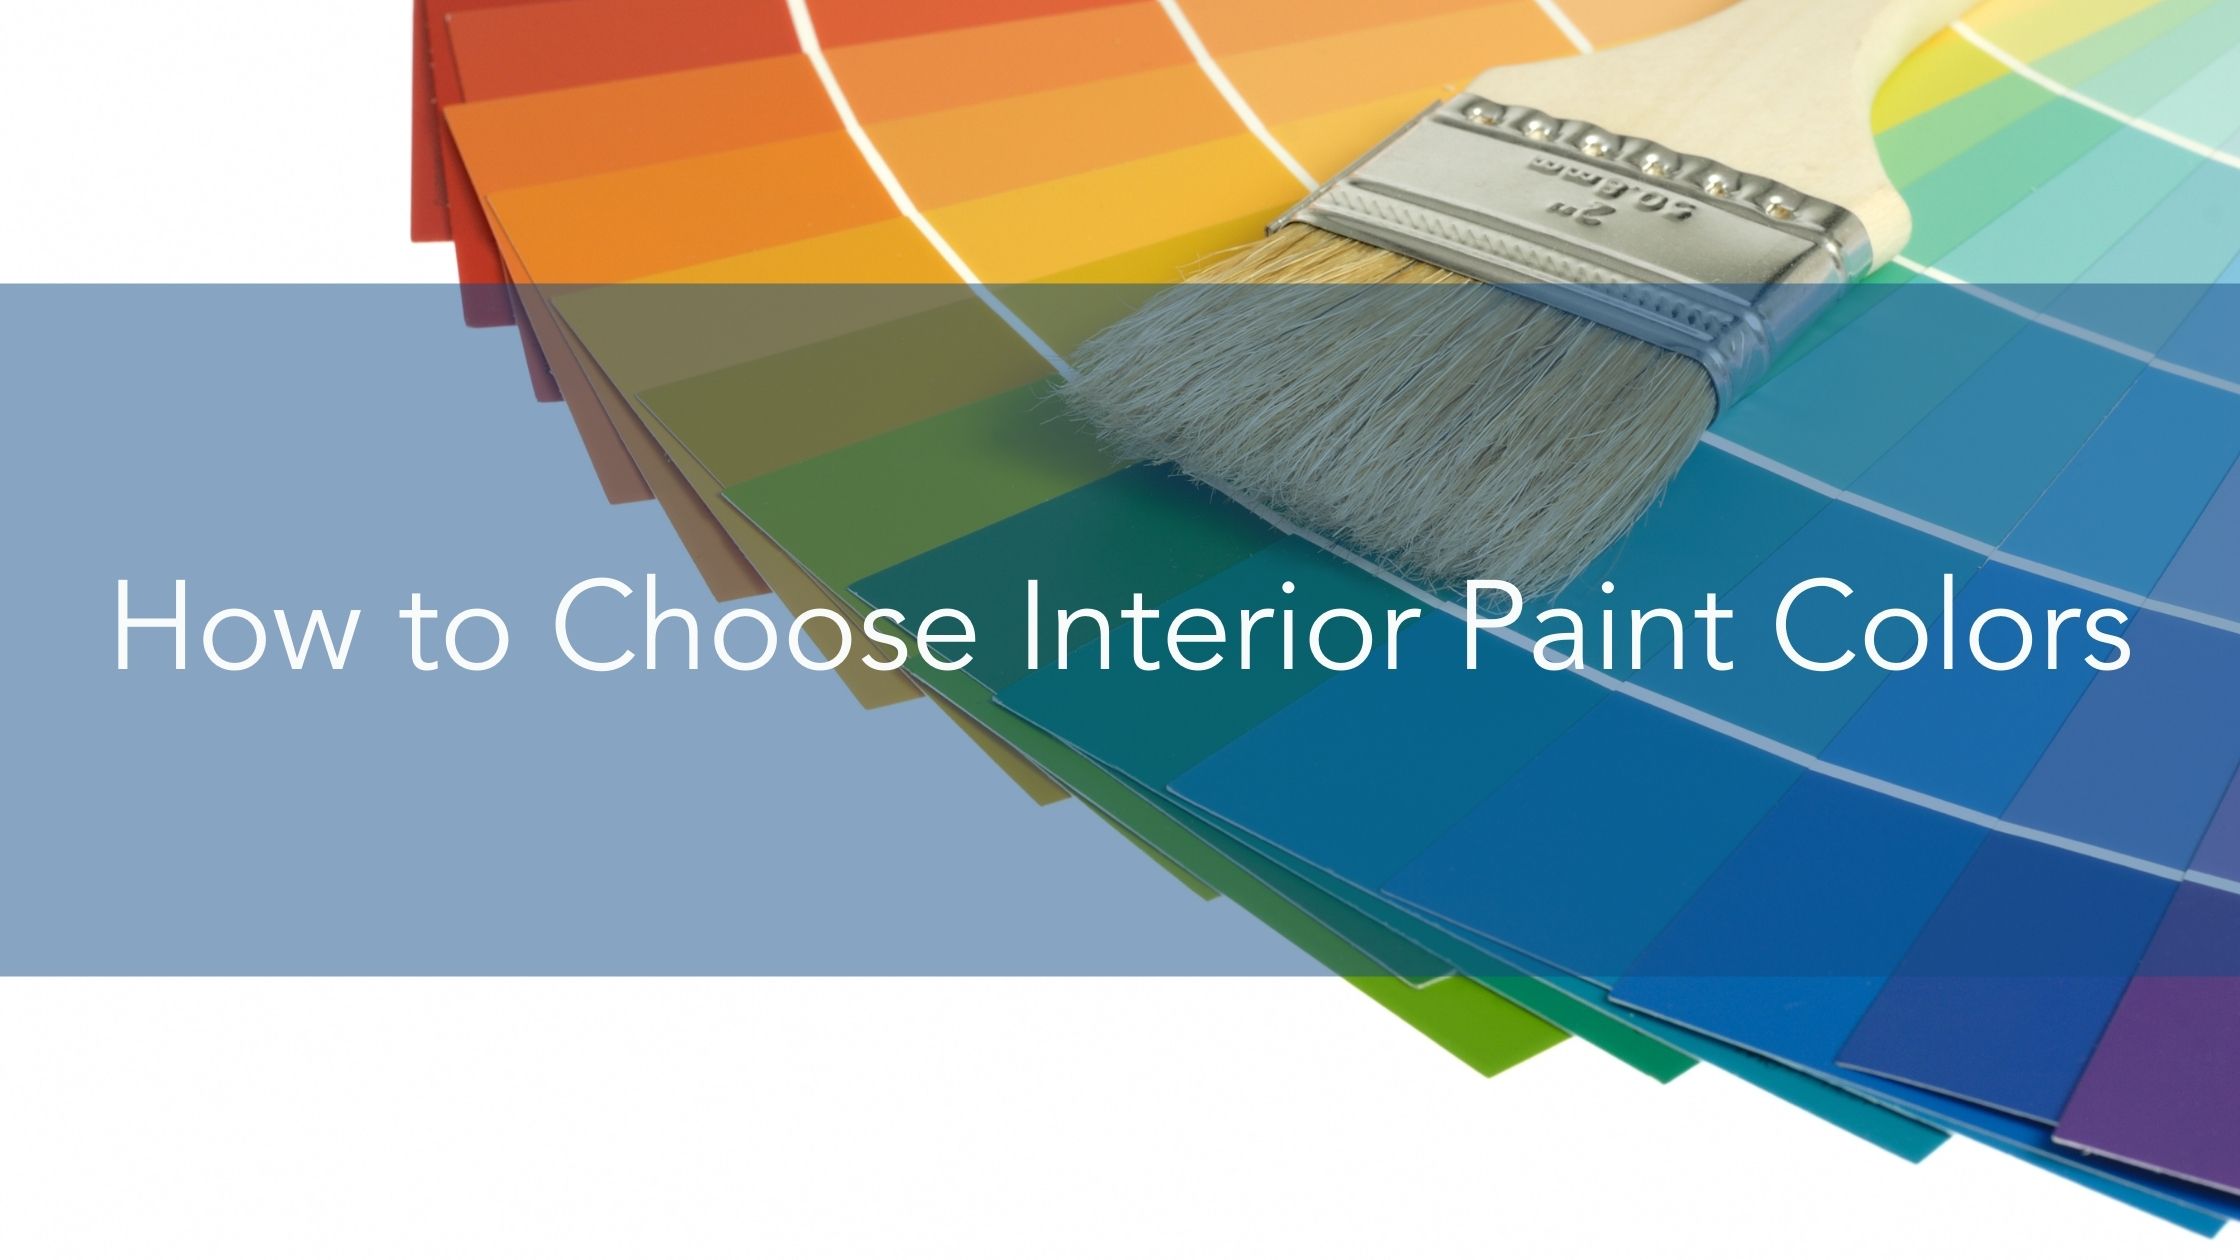 https://handymanconnection.com/wp-content/uploads/2022/02/How-to-Choose-Interior-Paint-Colors.jpg